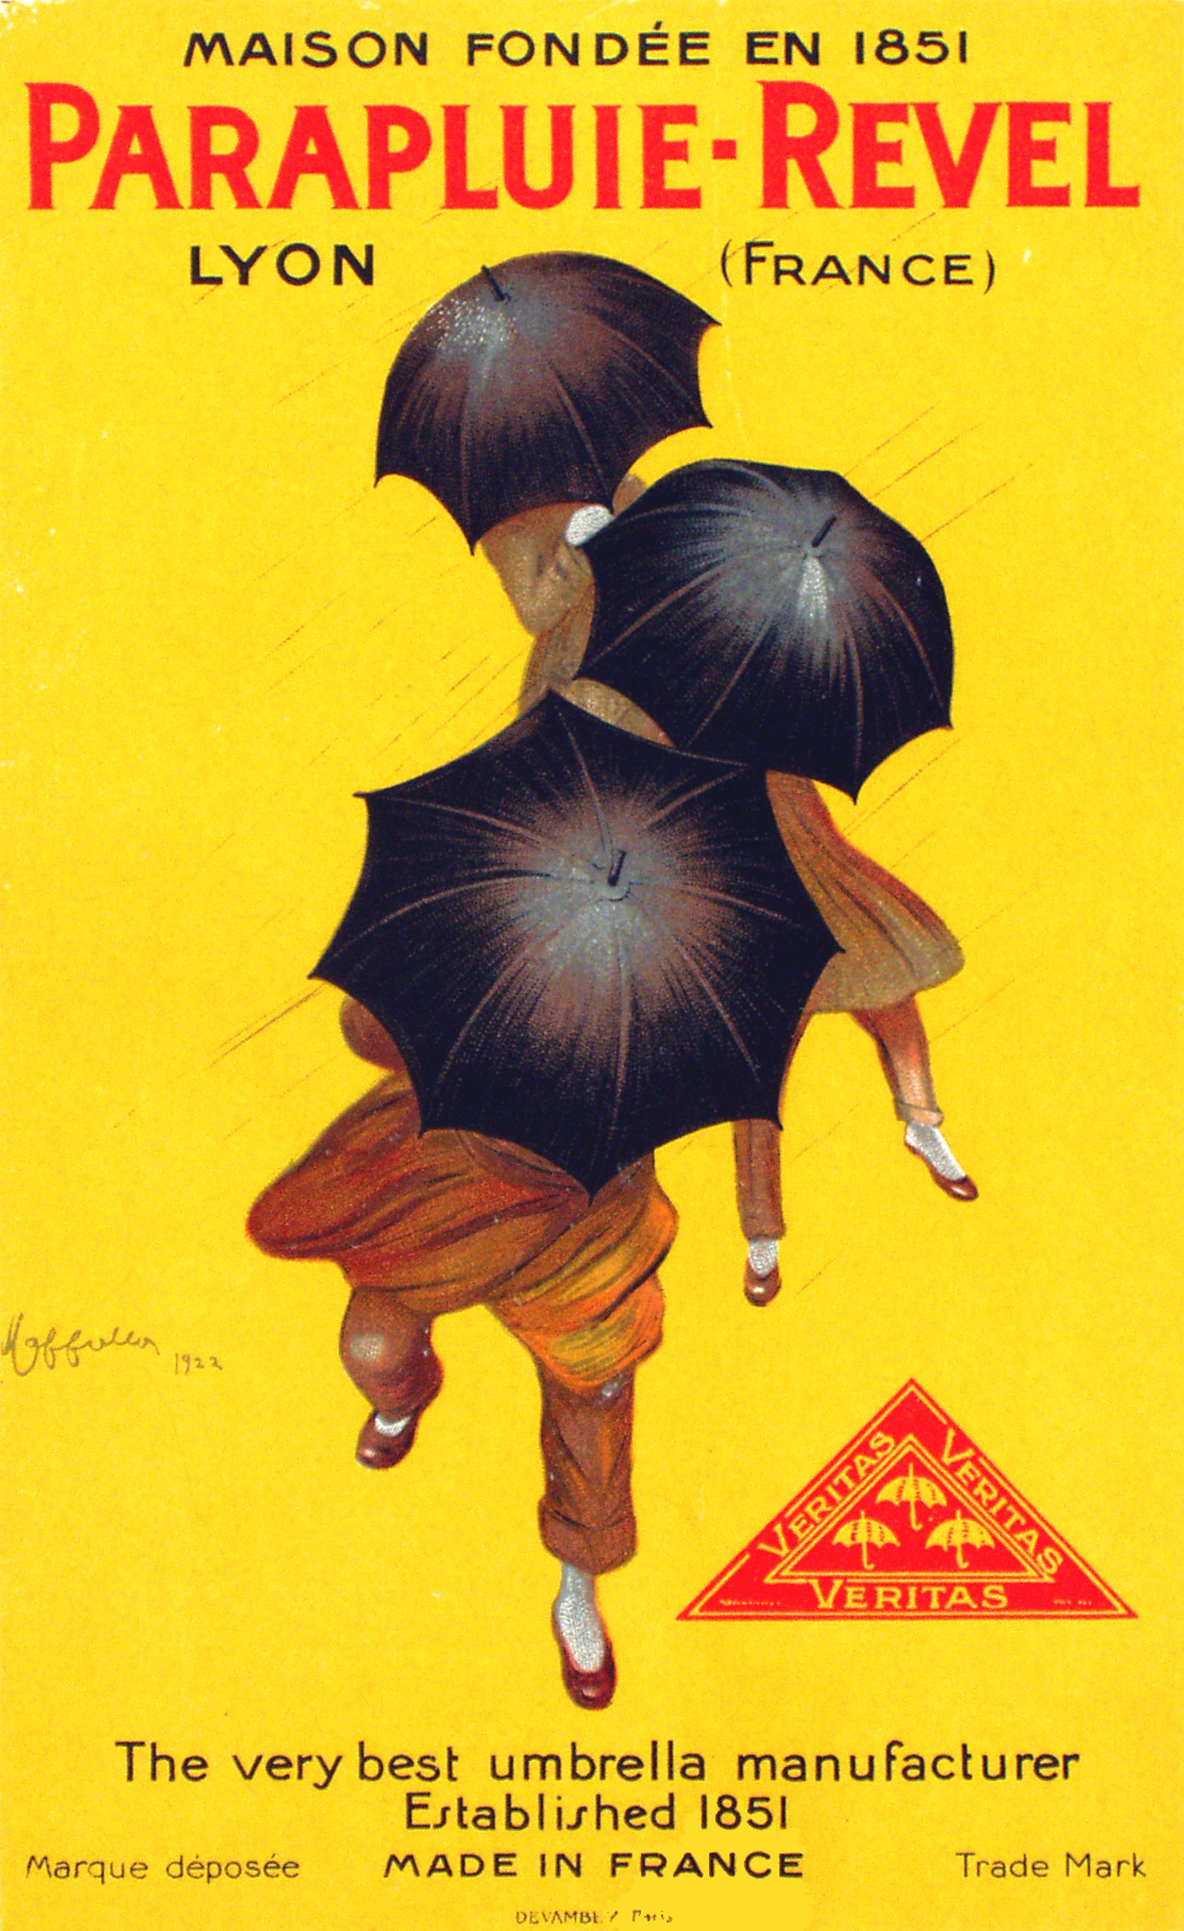 Parapluie Revel - window card